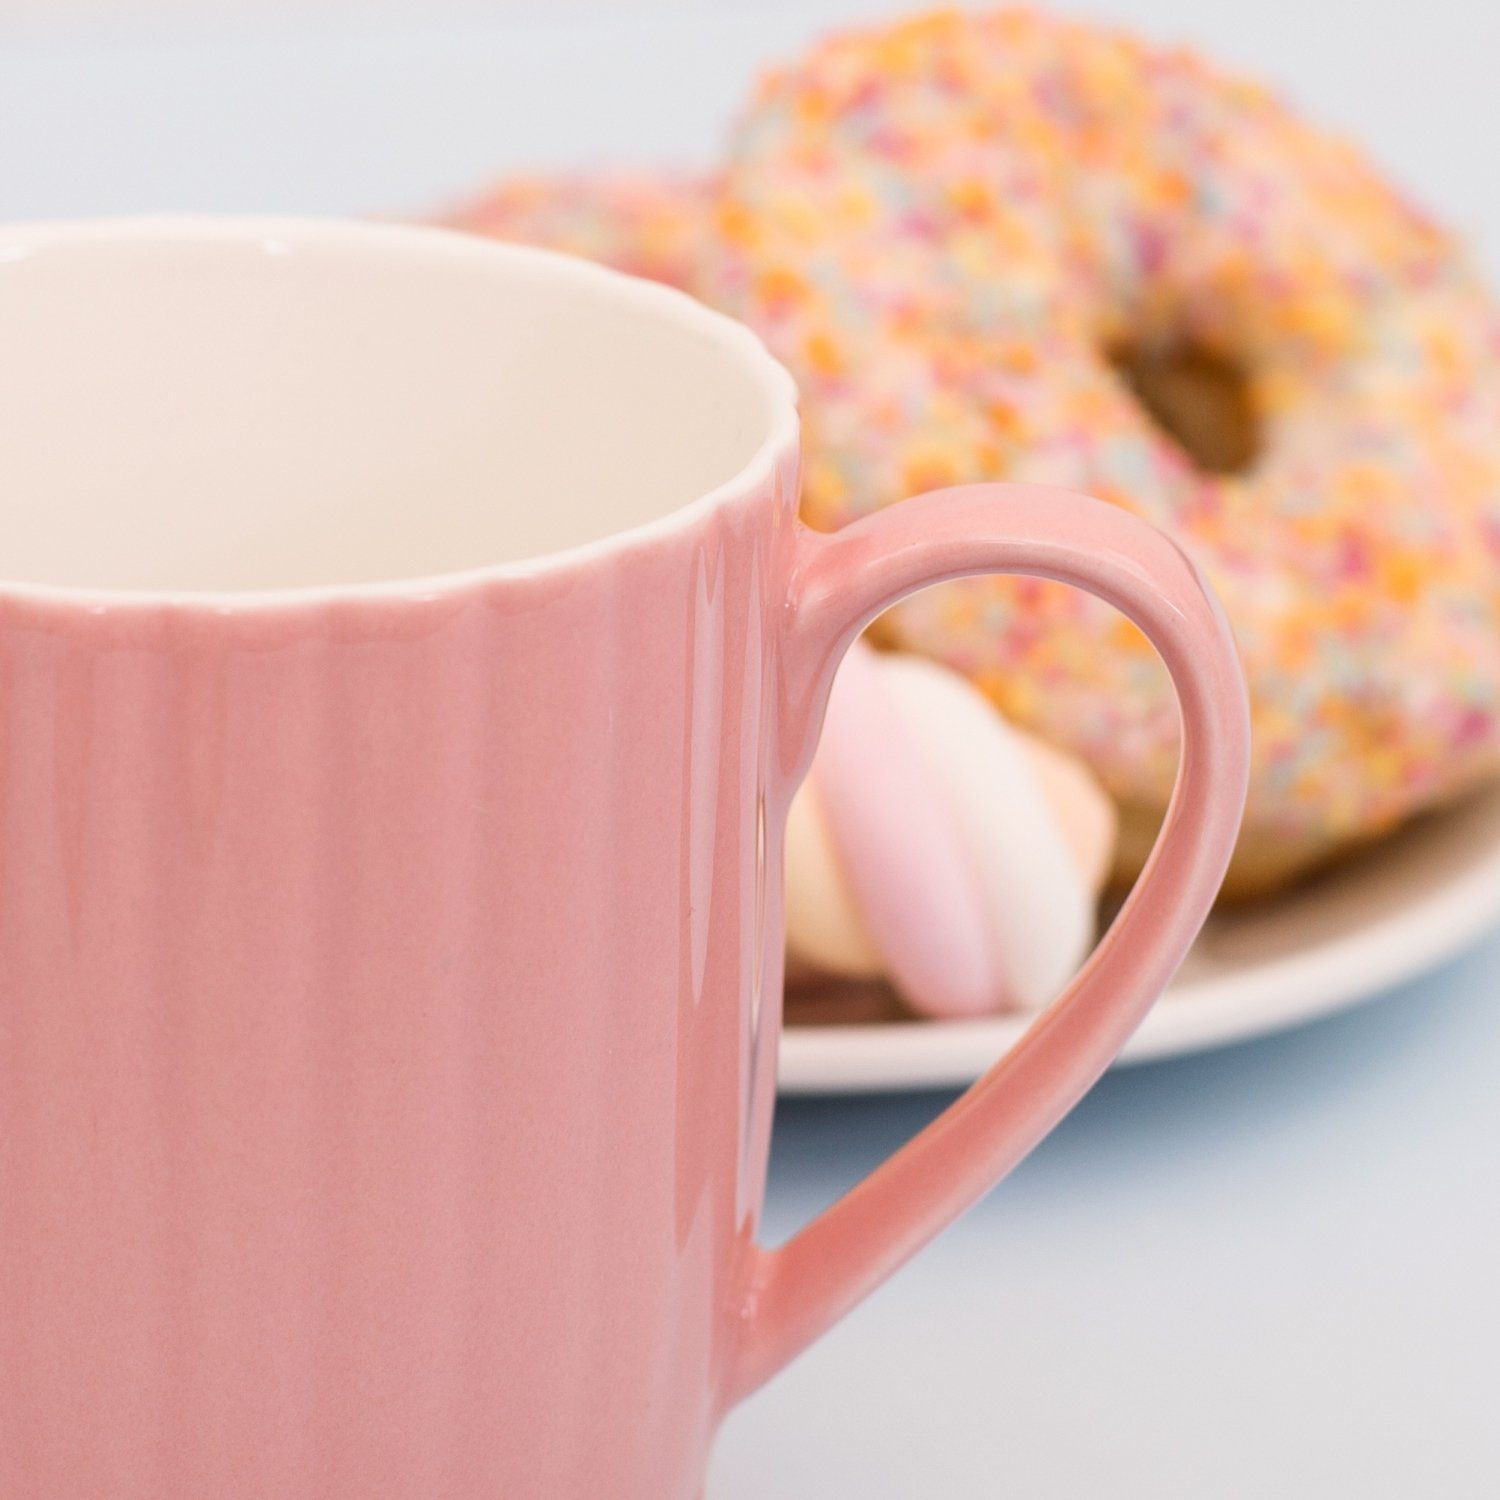 Geschenkset Up - Cupcake, Thumbs - Home Keramik, Tasse Socke Pusheen mit Pink Tasse